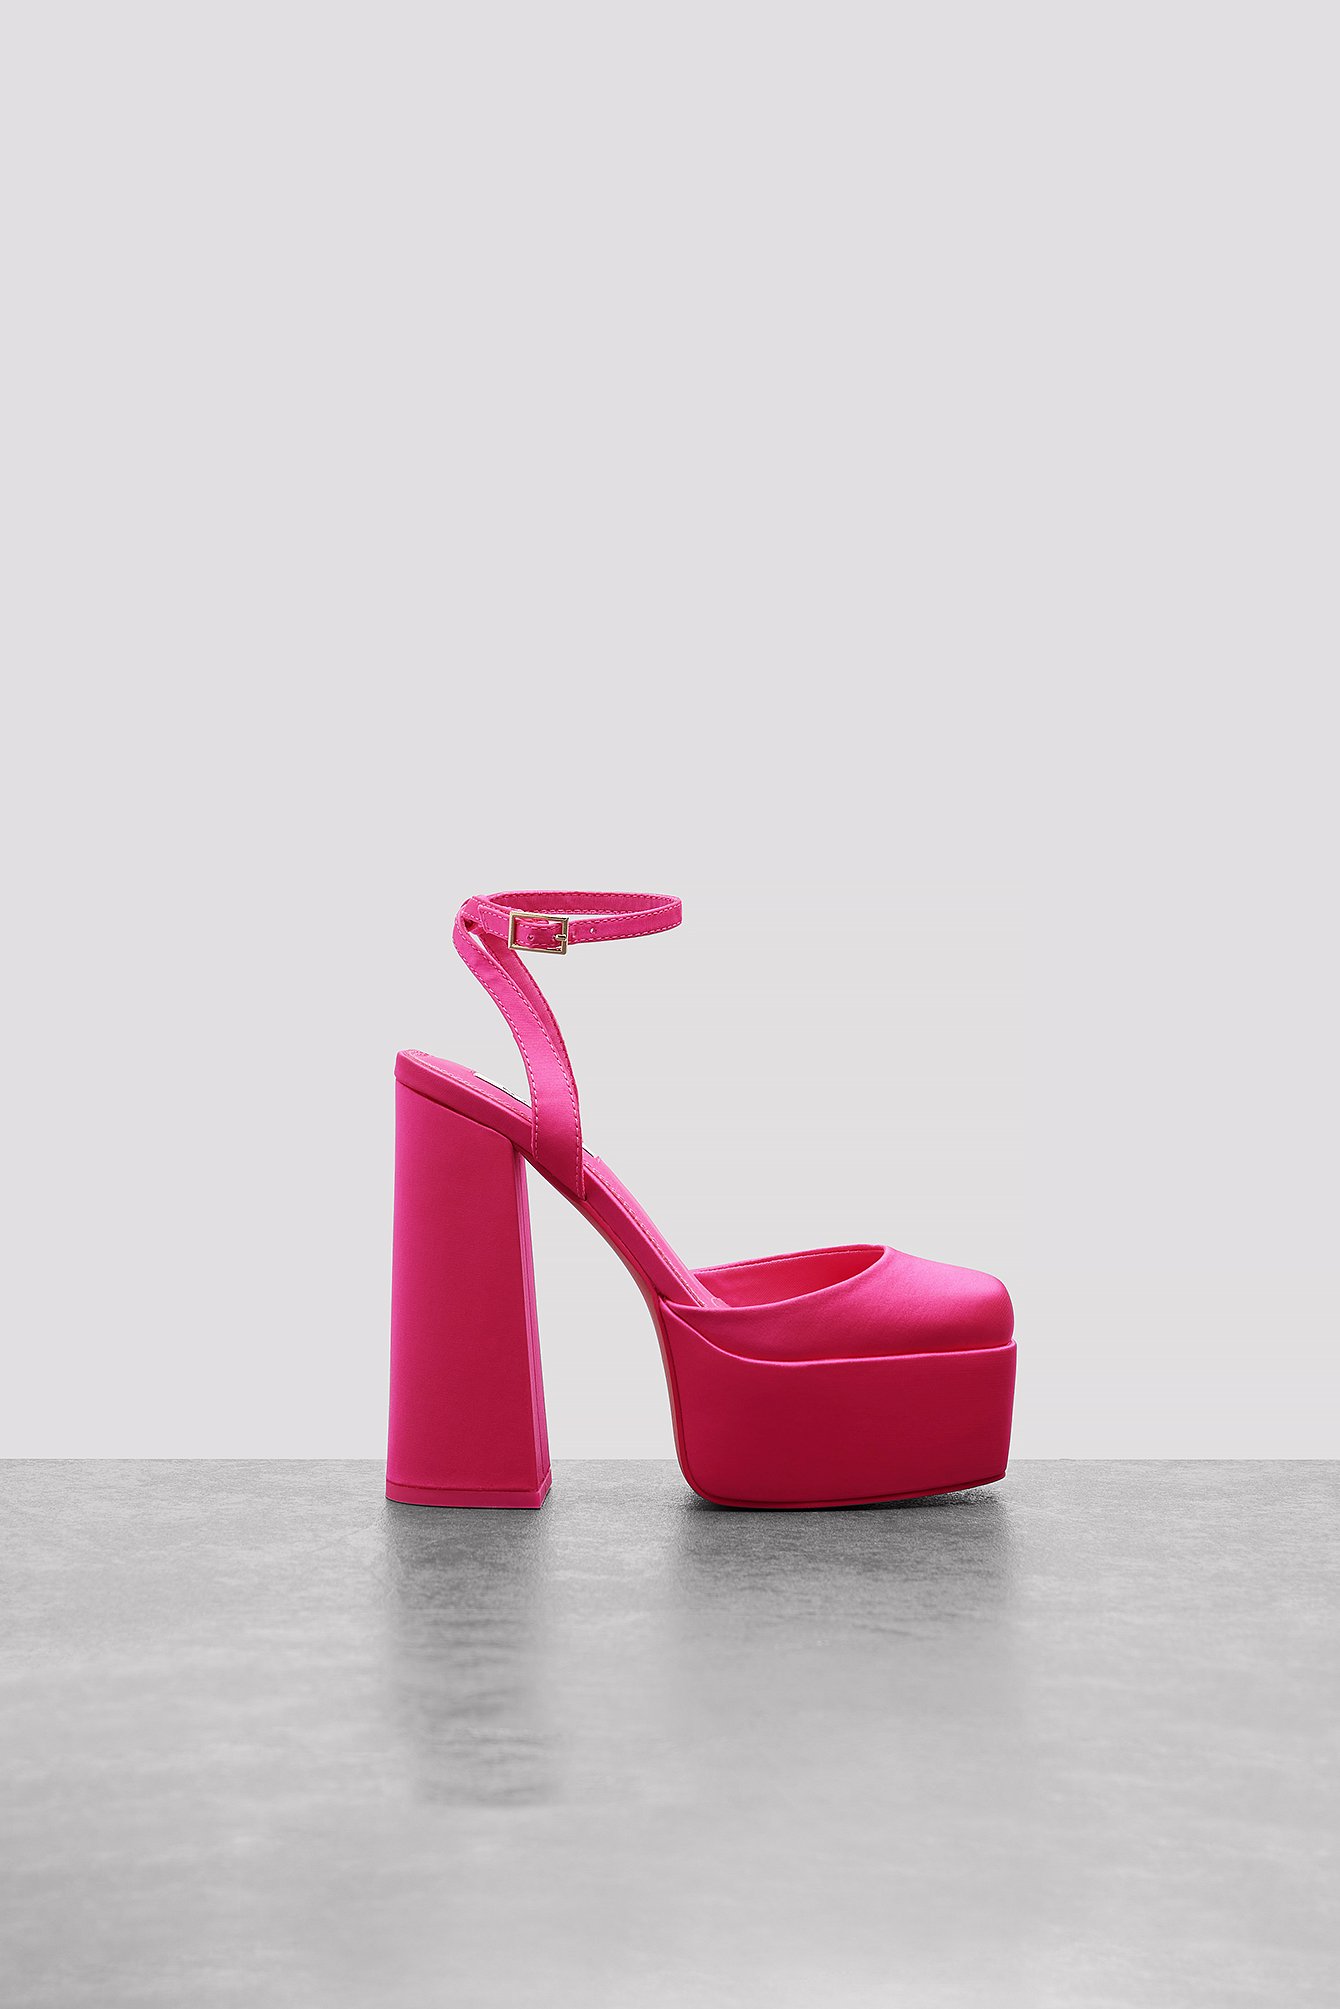 Schoenen Meisjesschoenen Hakken Vrouwen Platform Hakken-roze peoni 